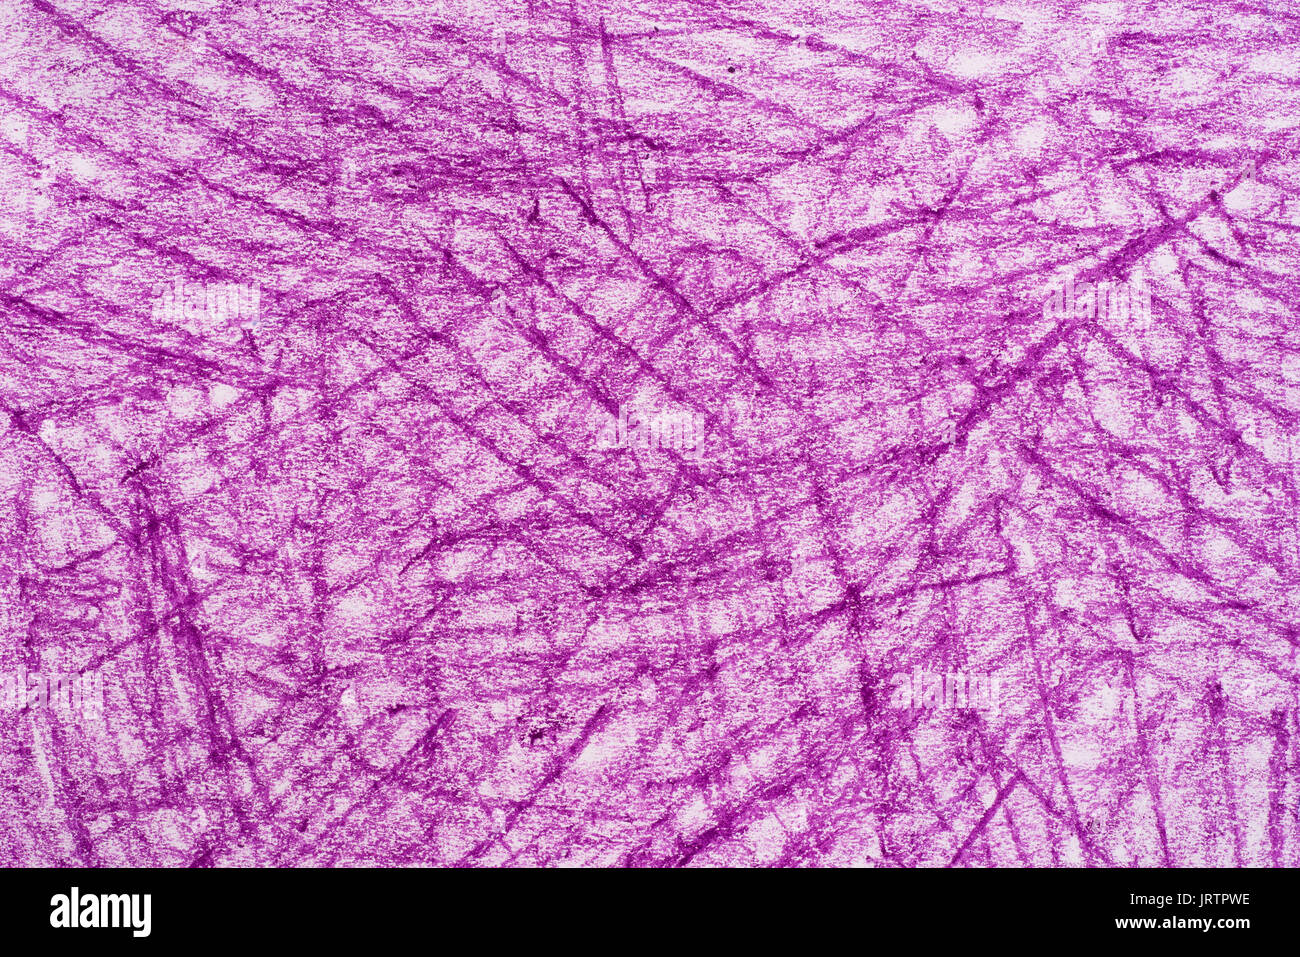 violet color crayon doodles background texture Stock Photo